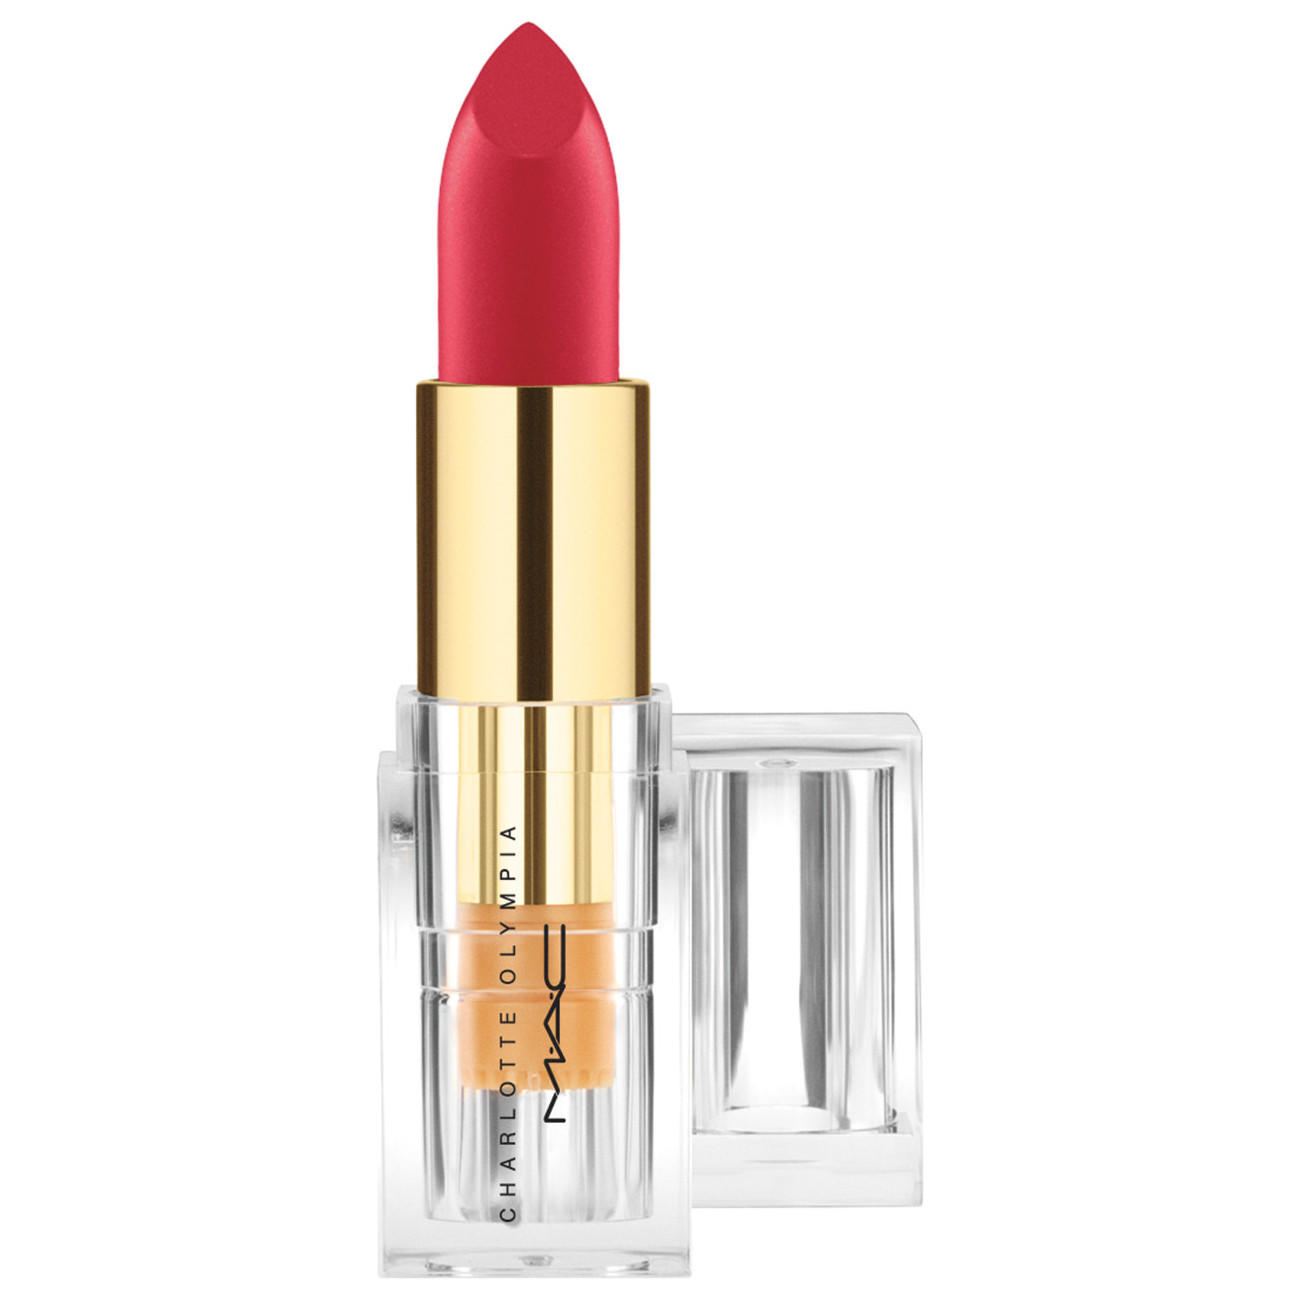 MAC Lipstick Charlotte Olympia Collection Starlett Scarlet